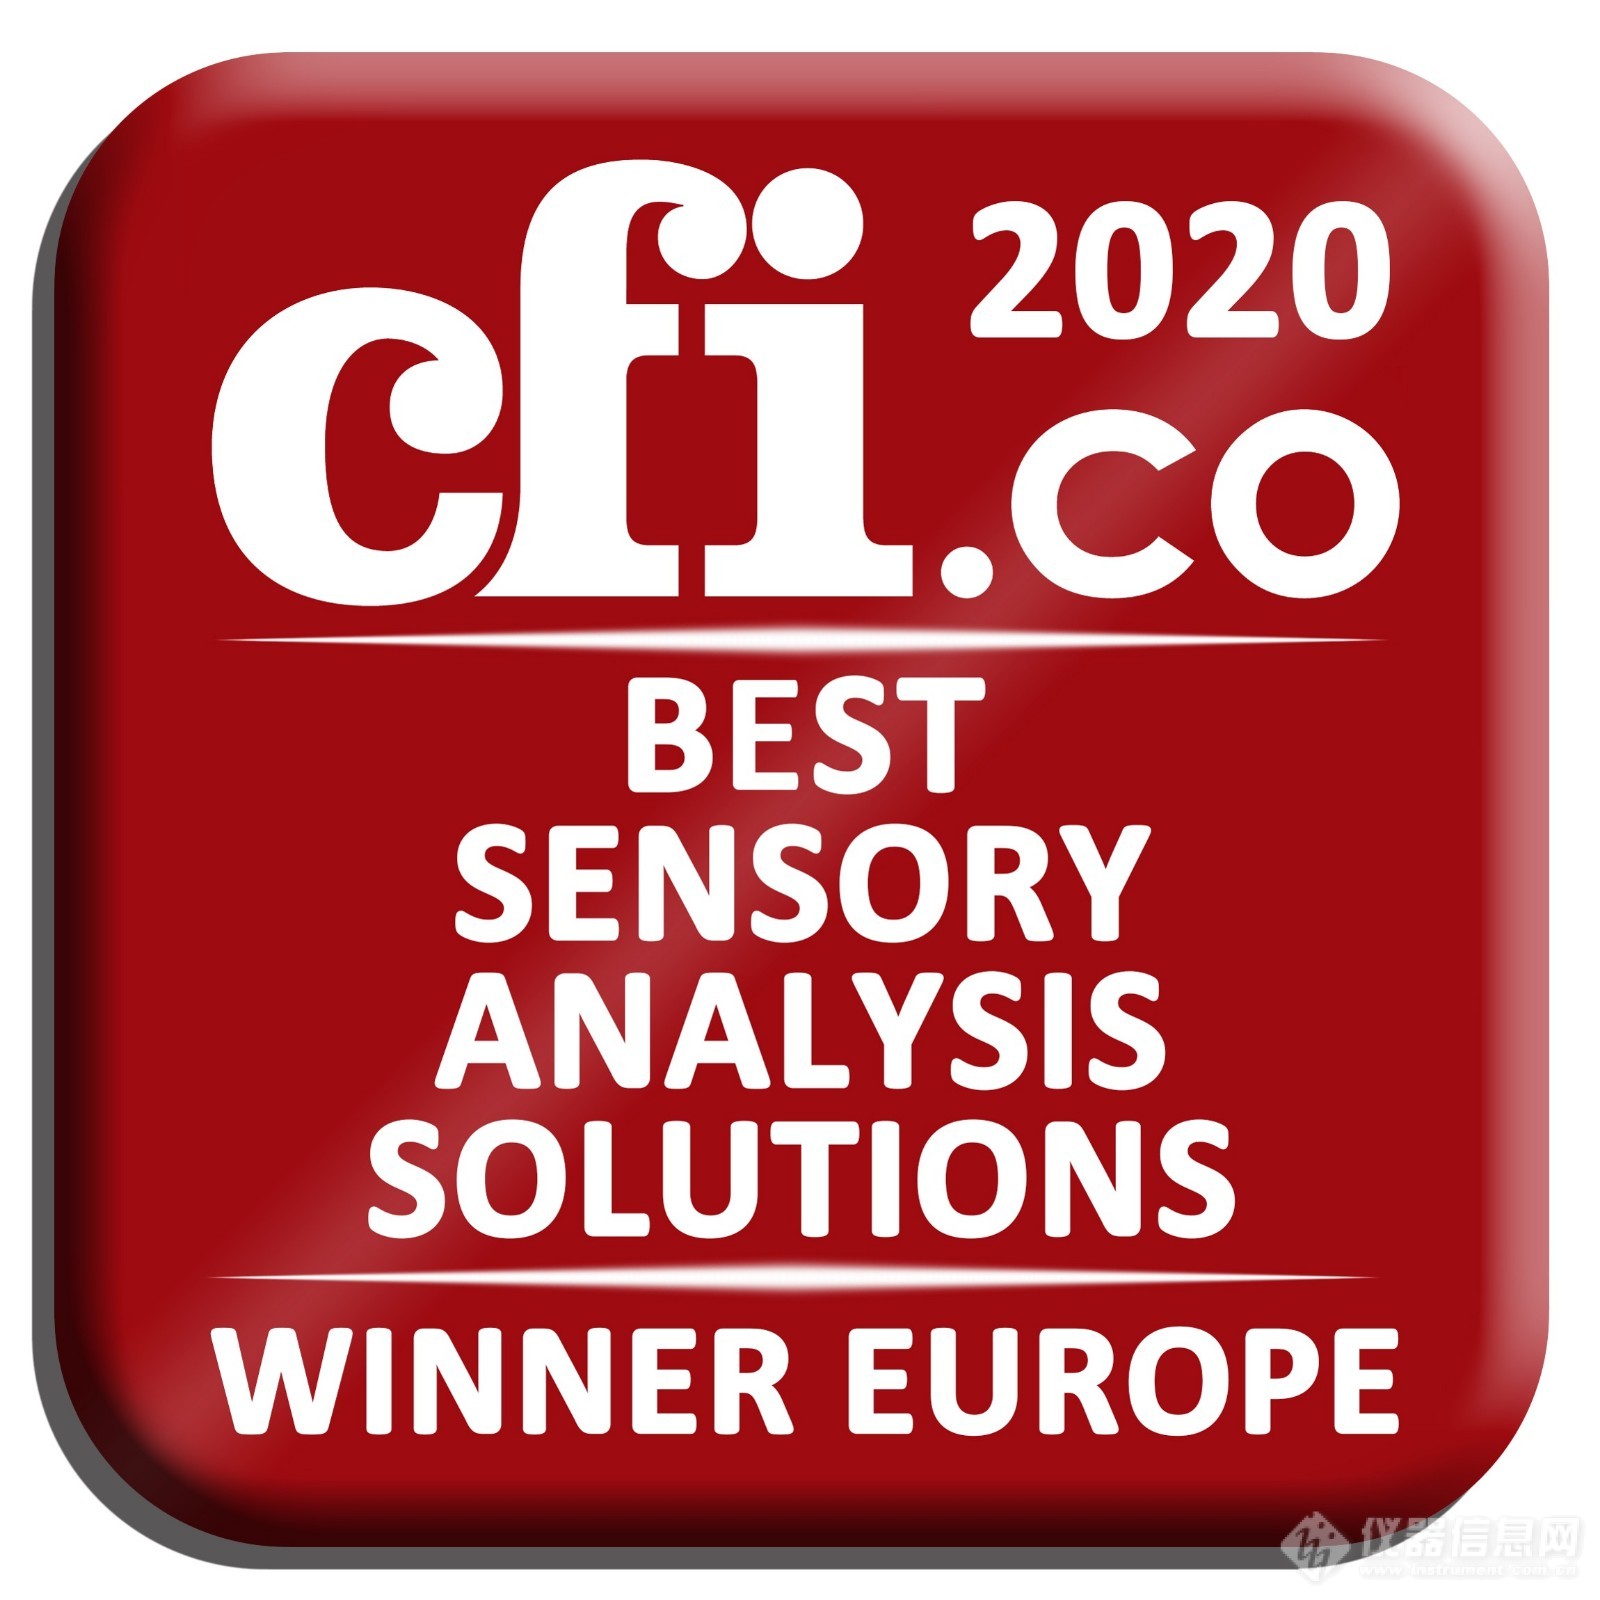 Alpha MOS 荣获“Best sensory analysis solutions Europe 2020”